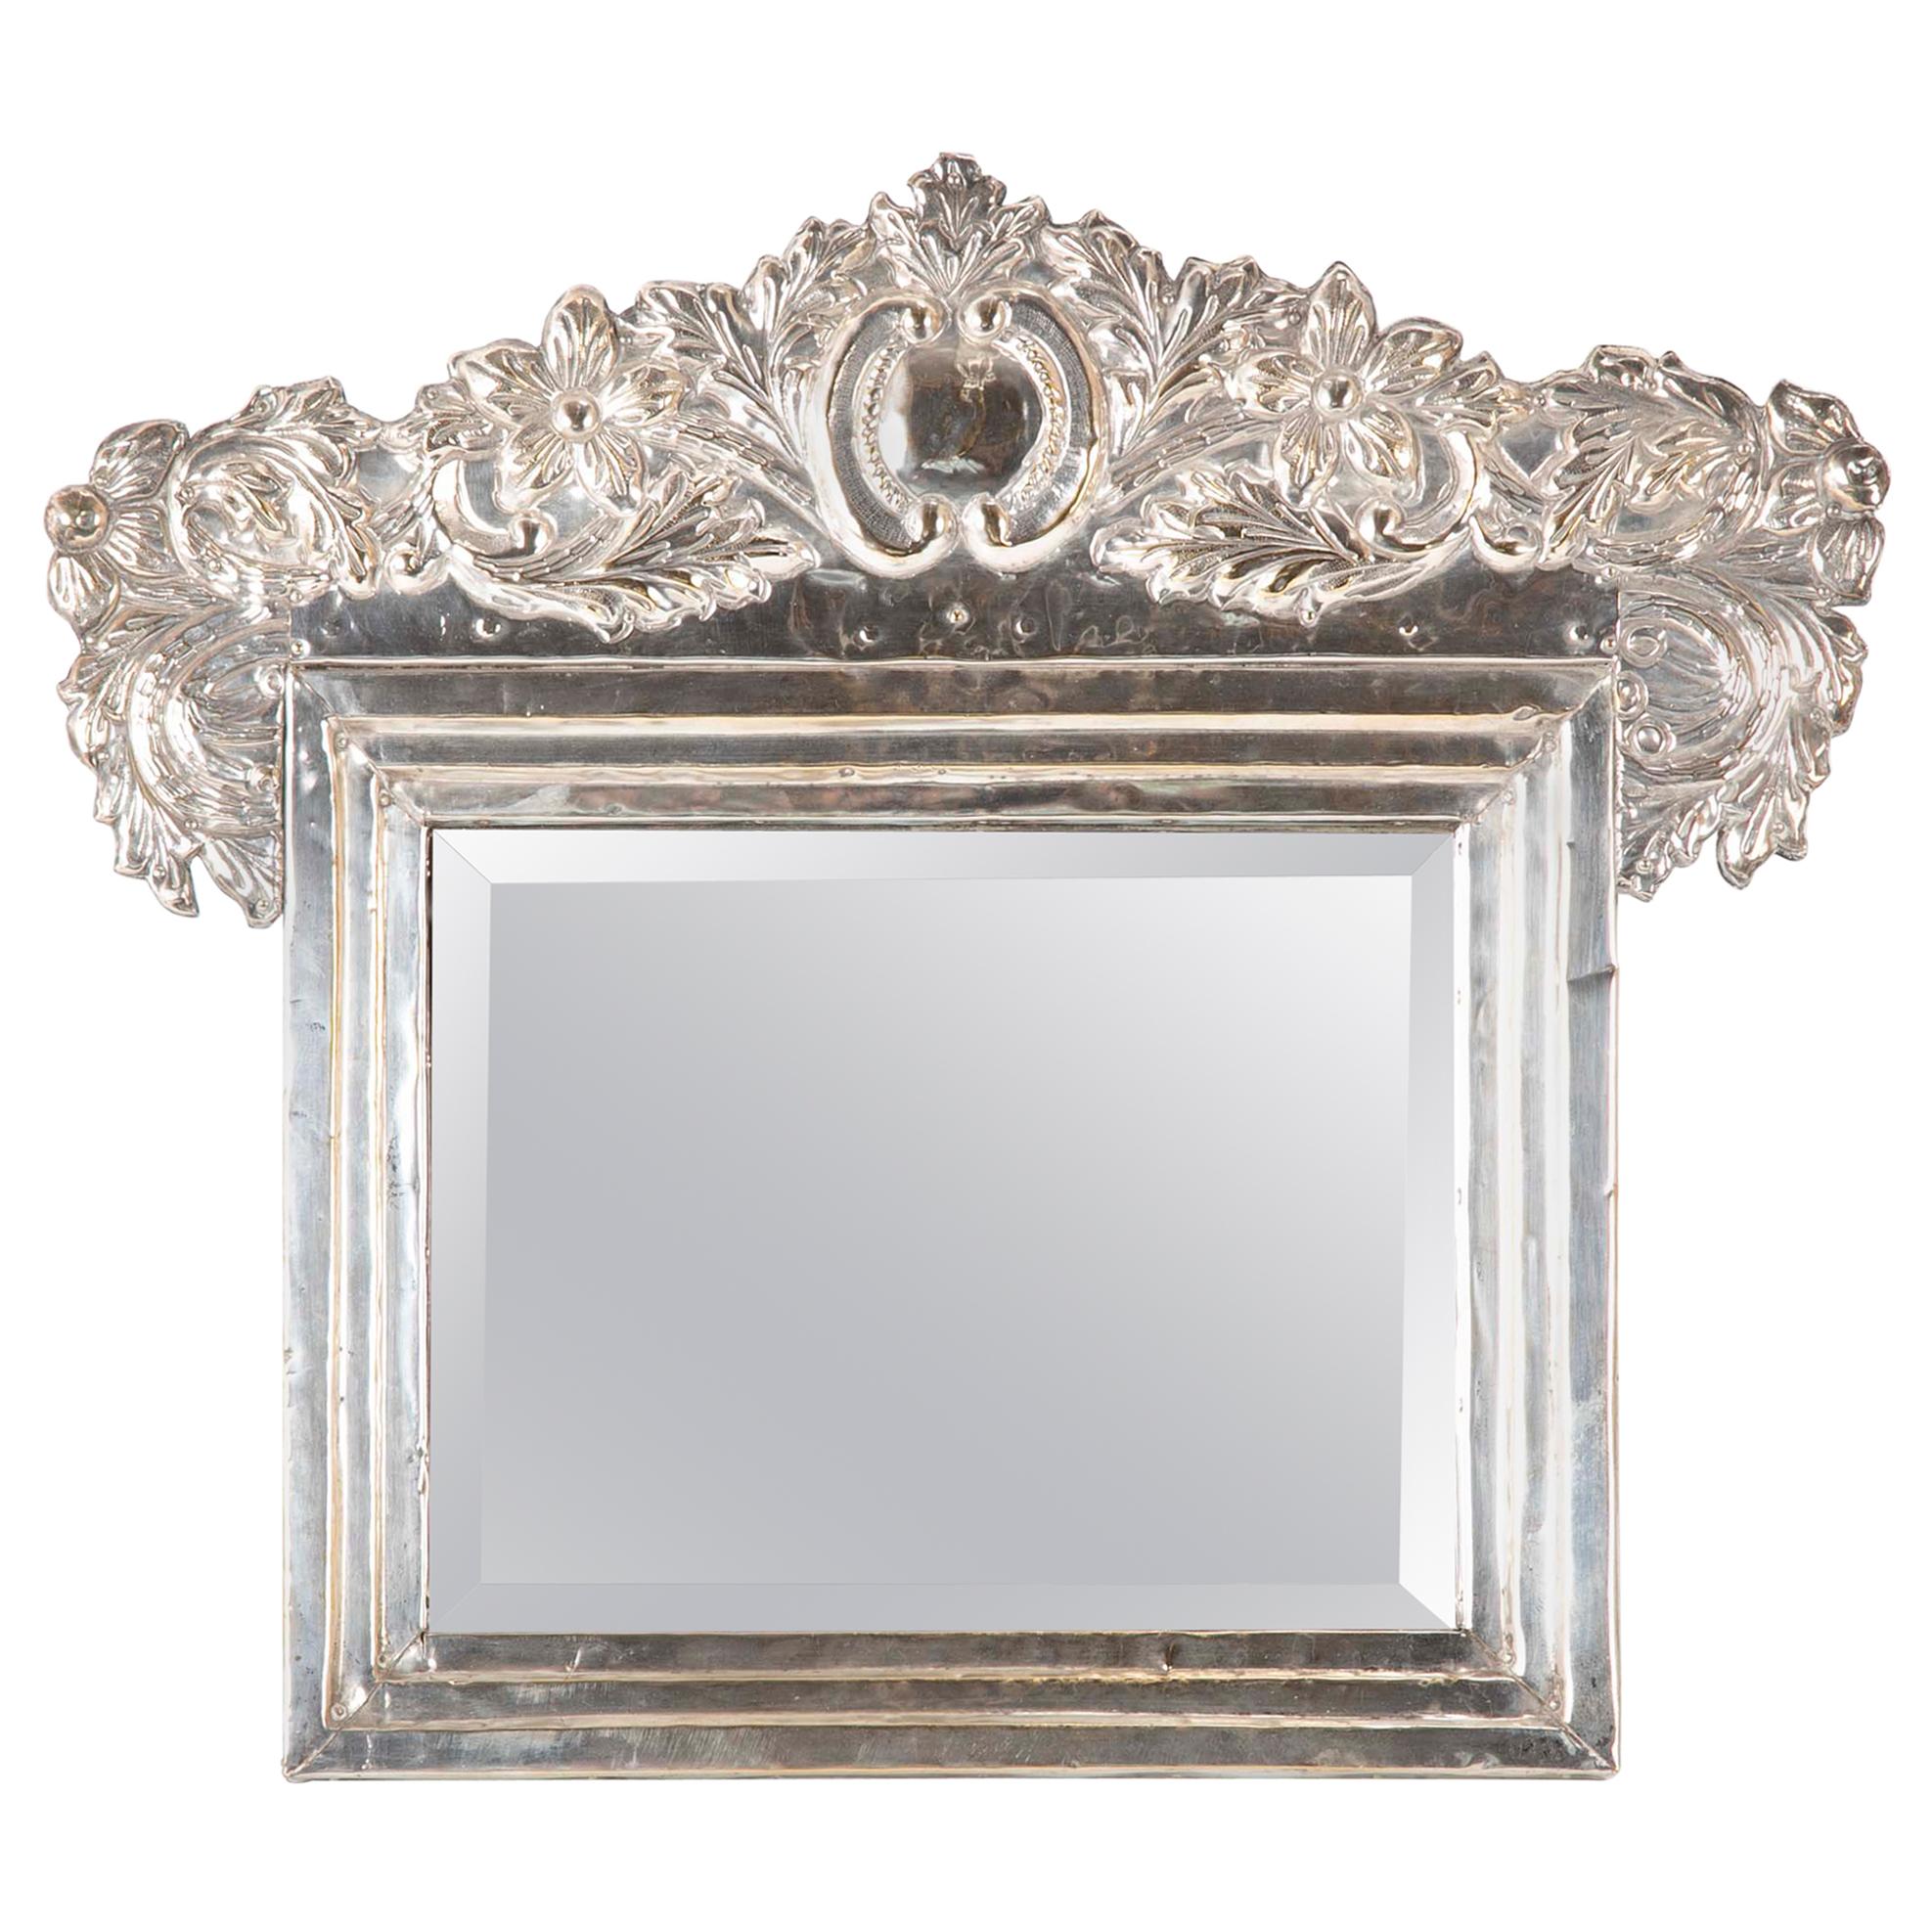 Spanish Colonial Peruvian Silver Table Mirror